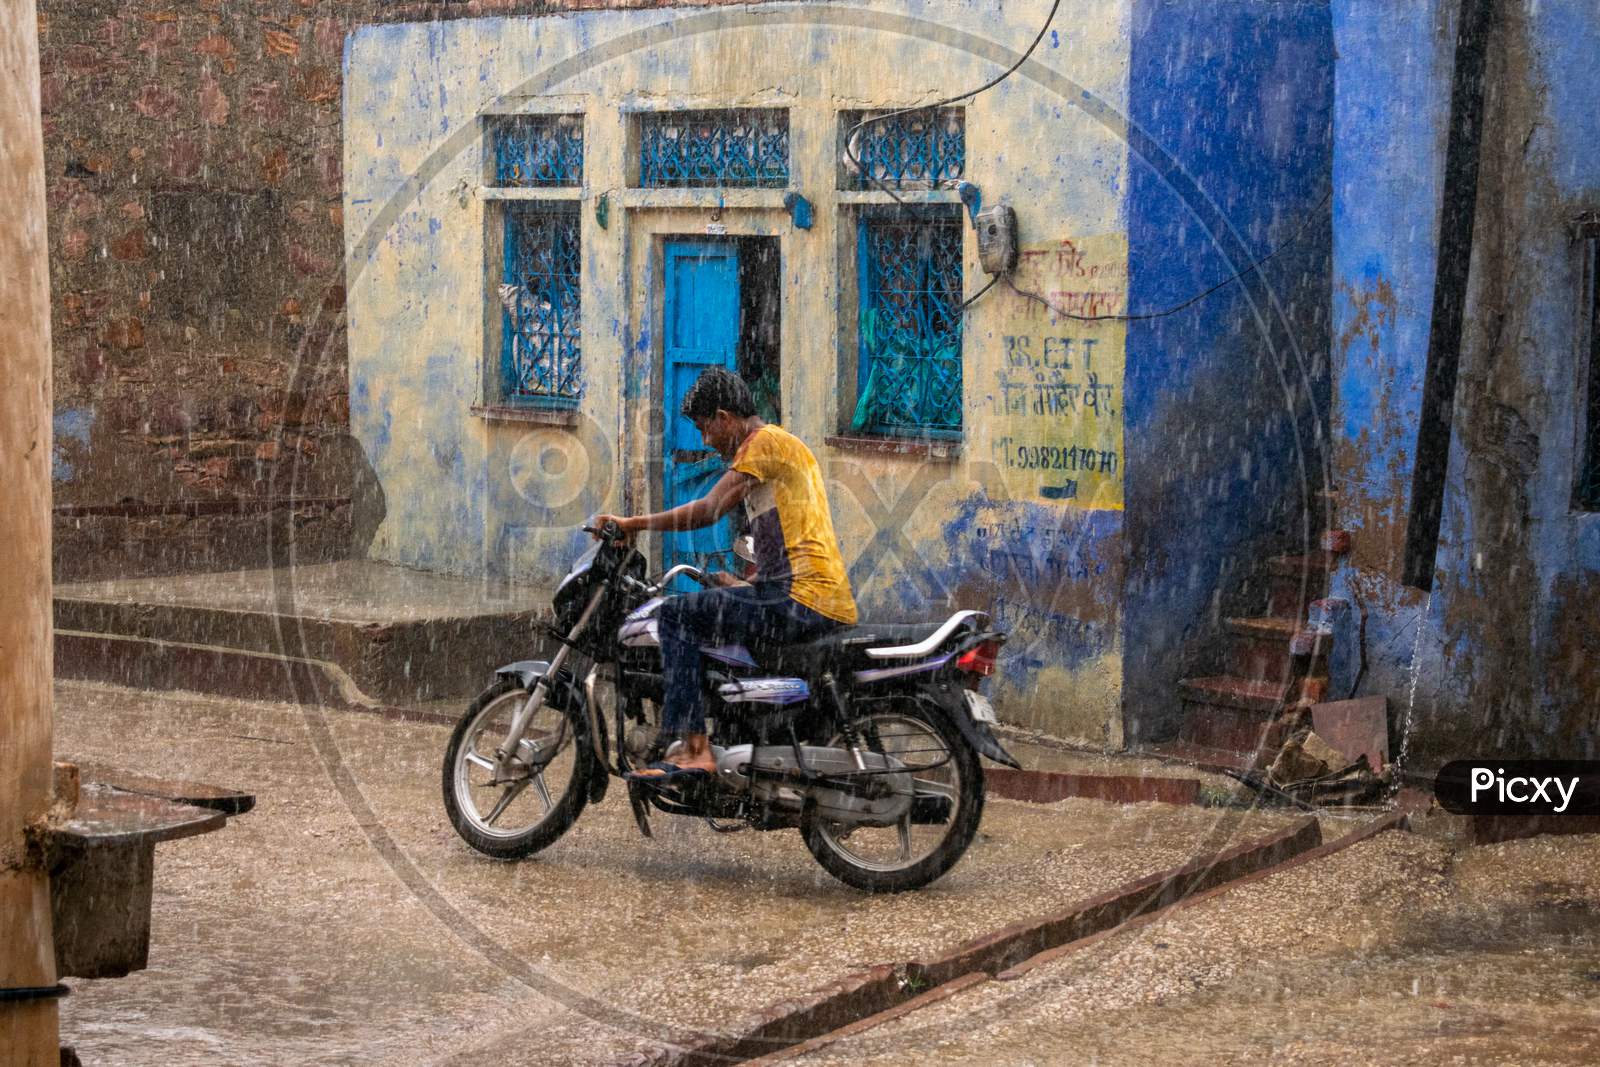 People ride bike while it rains heavily during monsoon season in Bharatpur